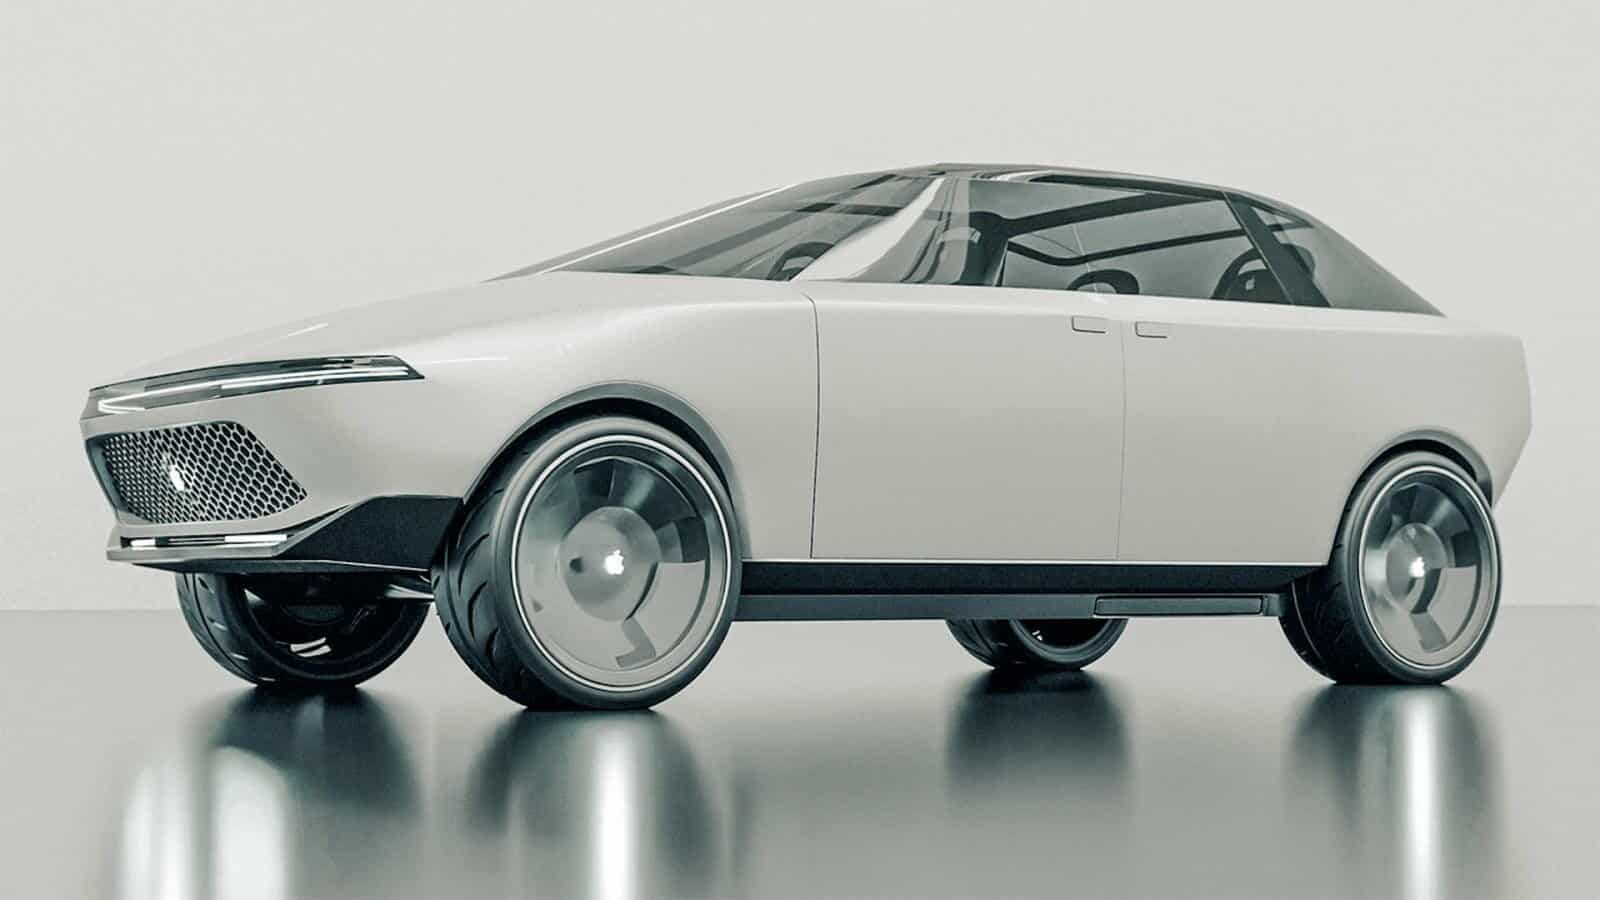 apple car concept 01 1 - Apple: Θέλει να φτιάξει δικό της αυτοκίνητο - Προσέλαβε βετεράνο κατασκευαστή της Ford με 31 χρόνια εμπειρίας (εικόνες)